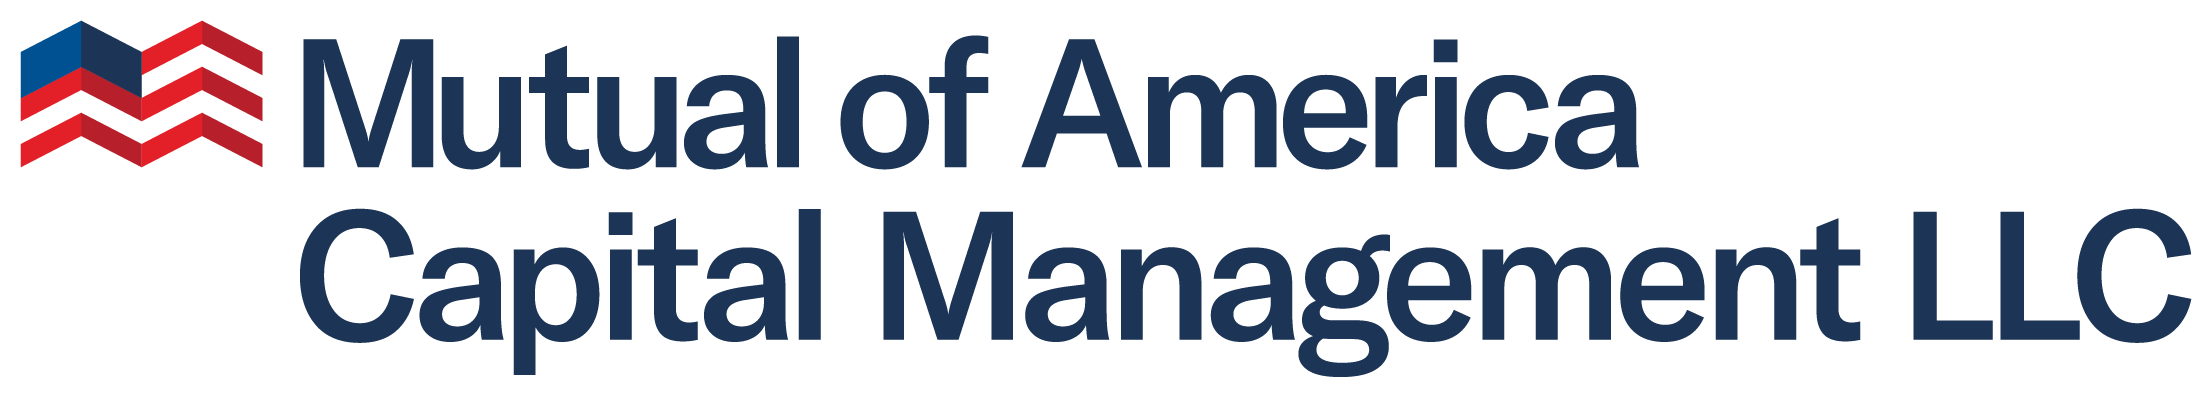 Mutual of America Capital Management